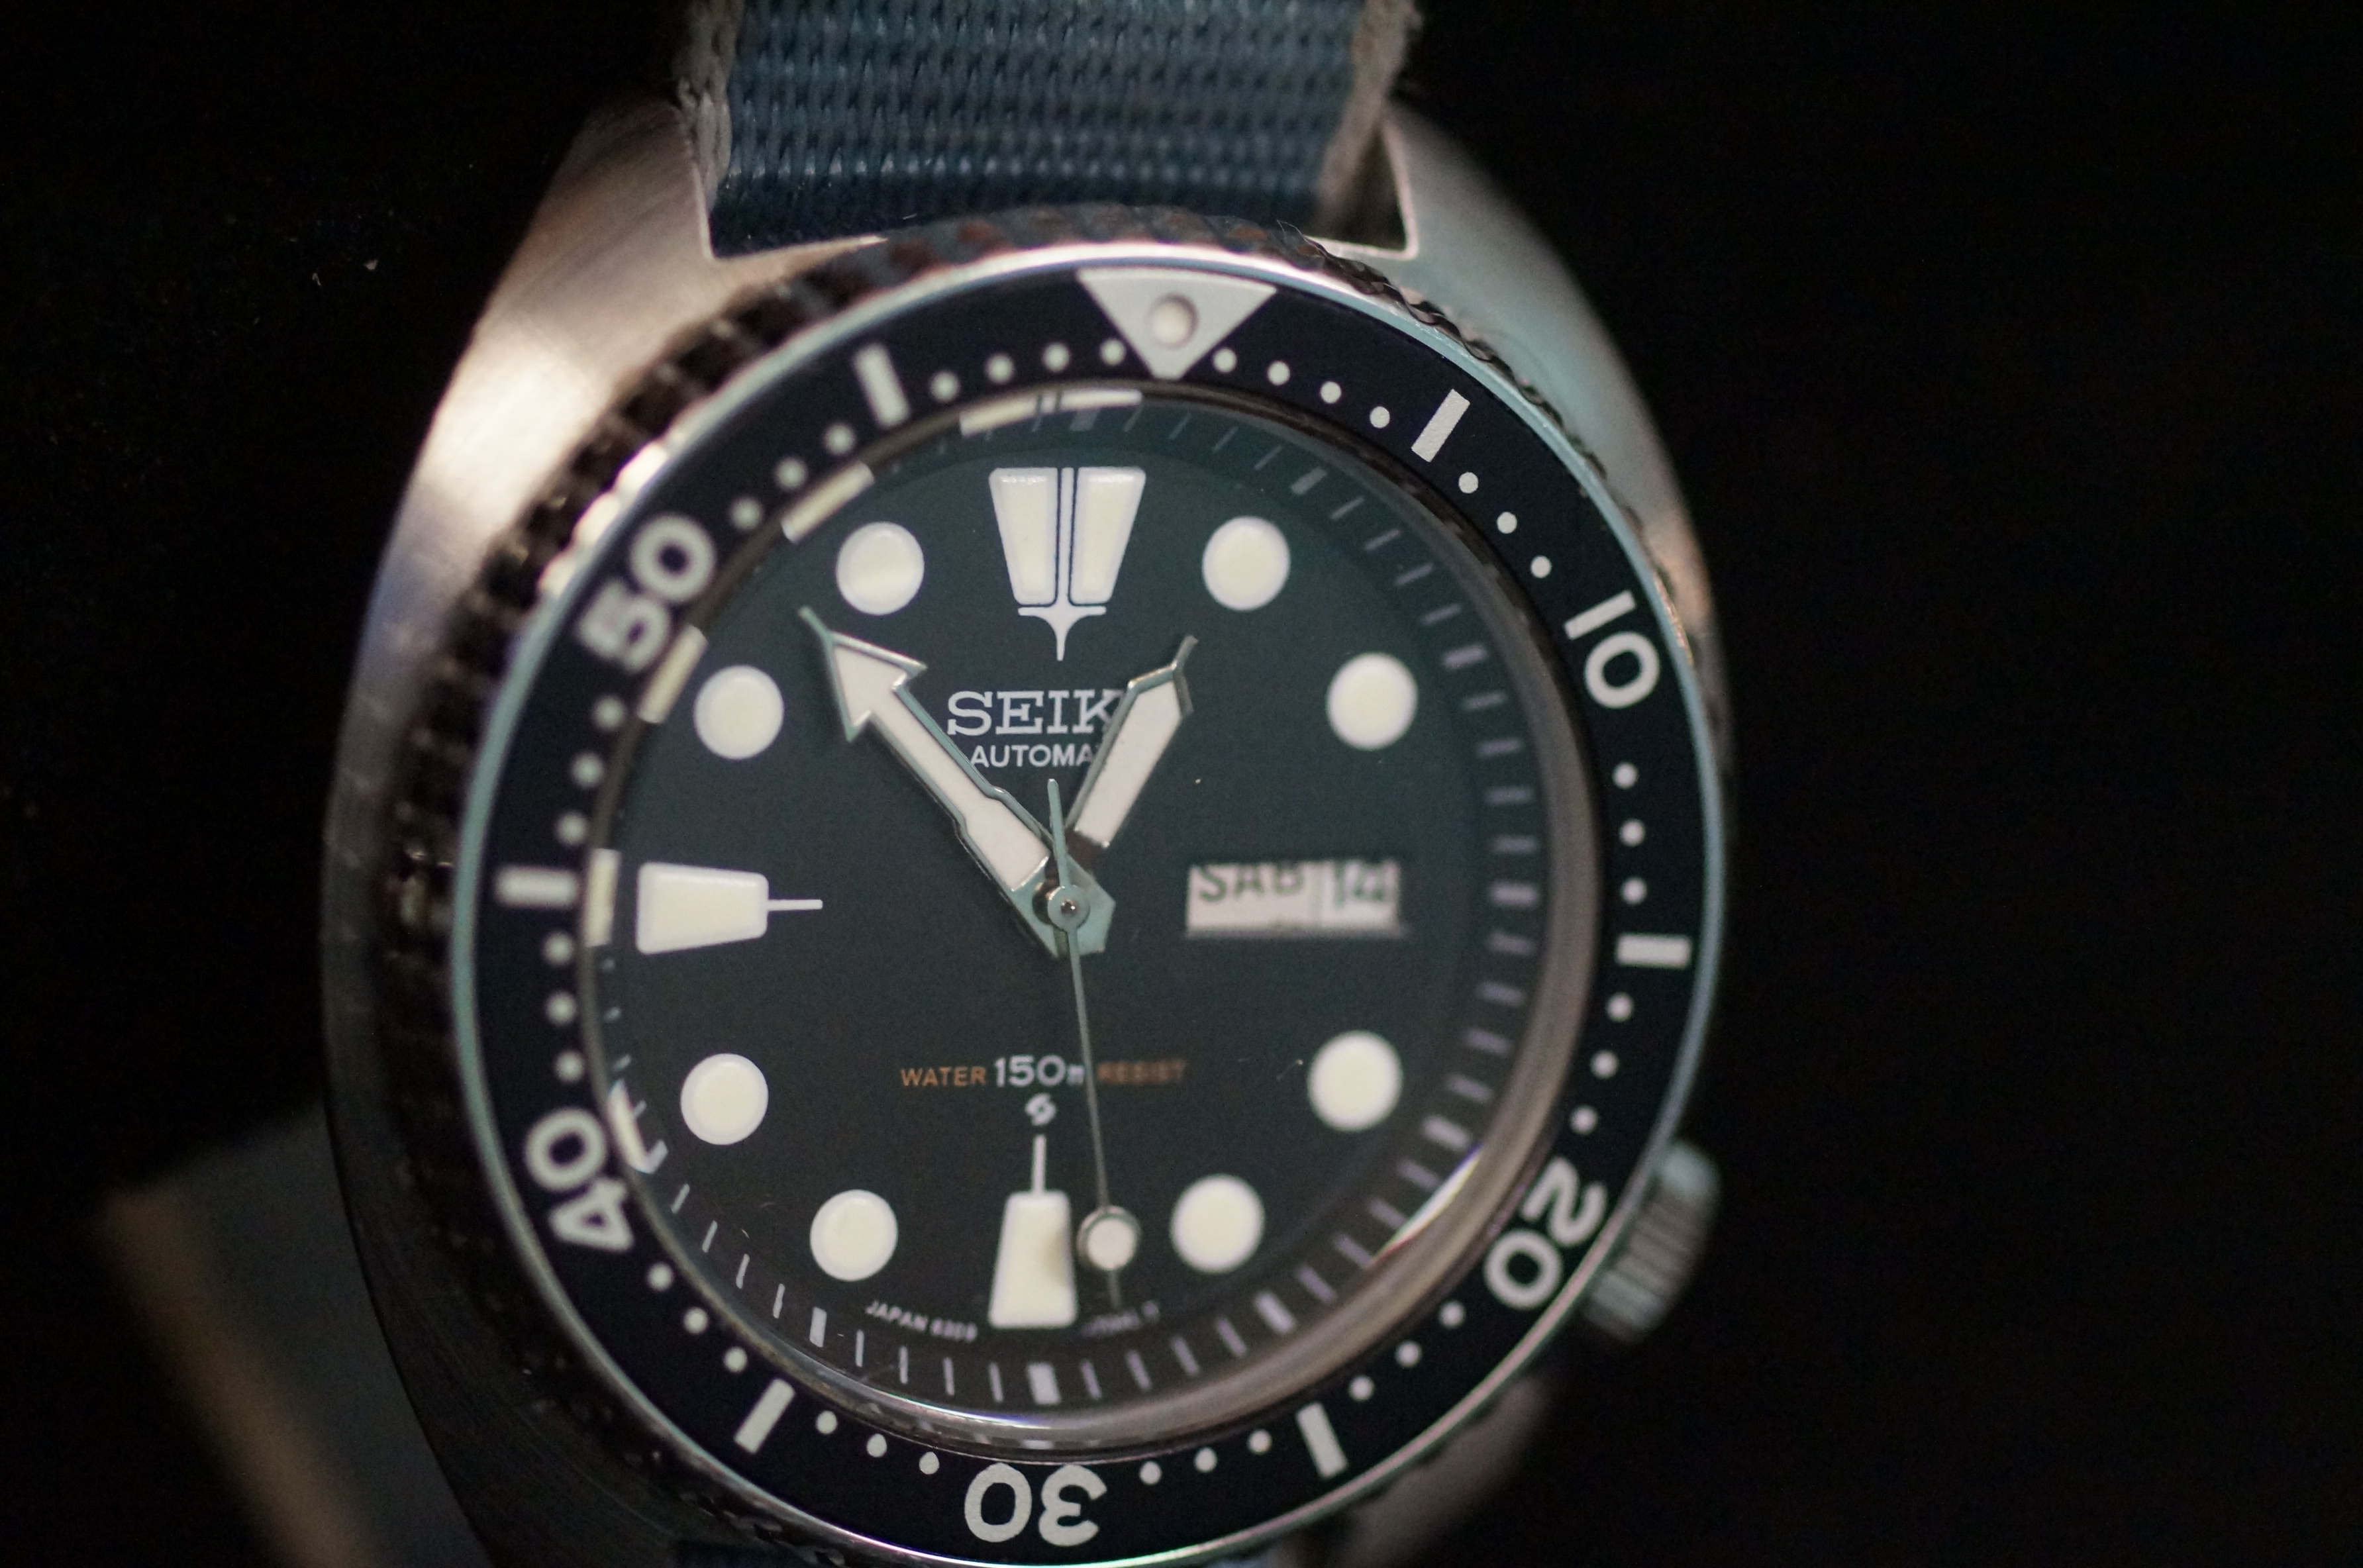 Vintage Gents Seiko automatic wristwatch 150m